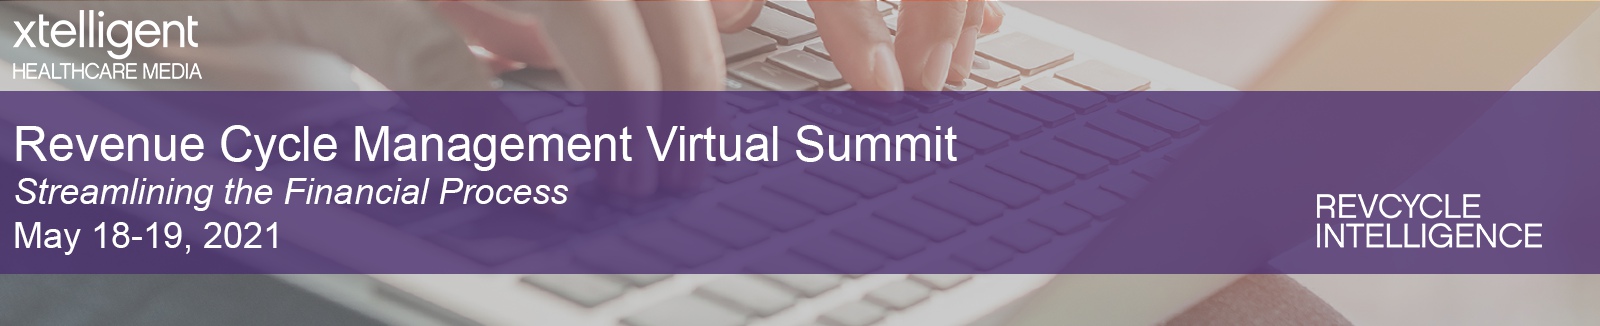 Revenue Cycle Management Virtual Summit